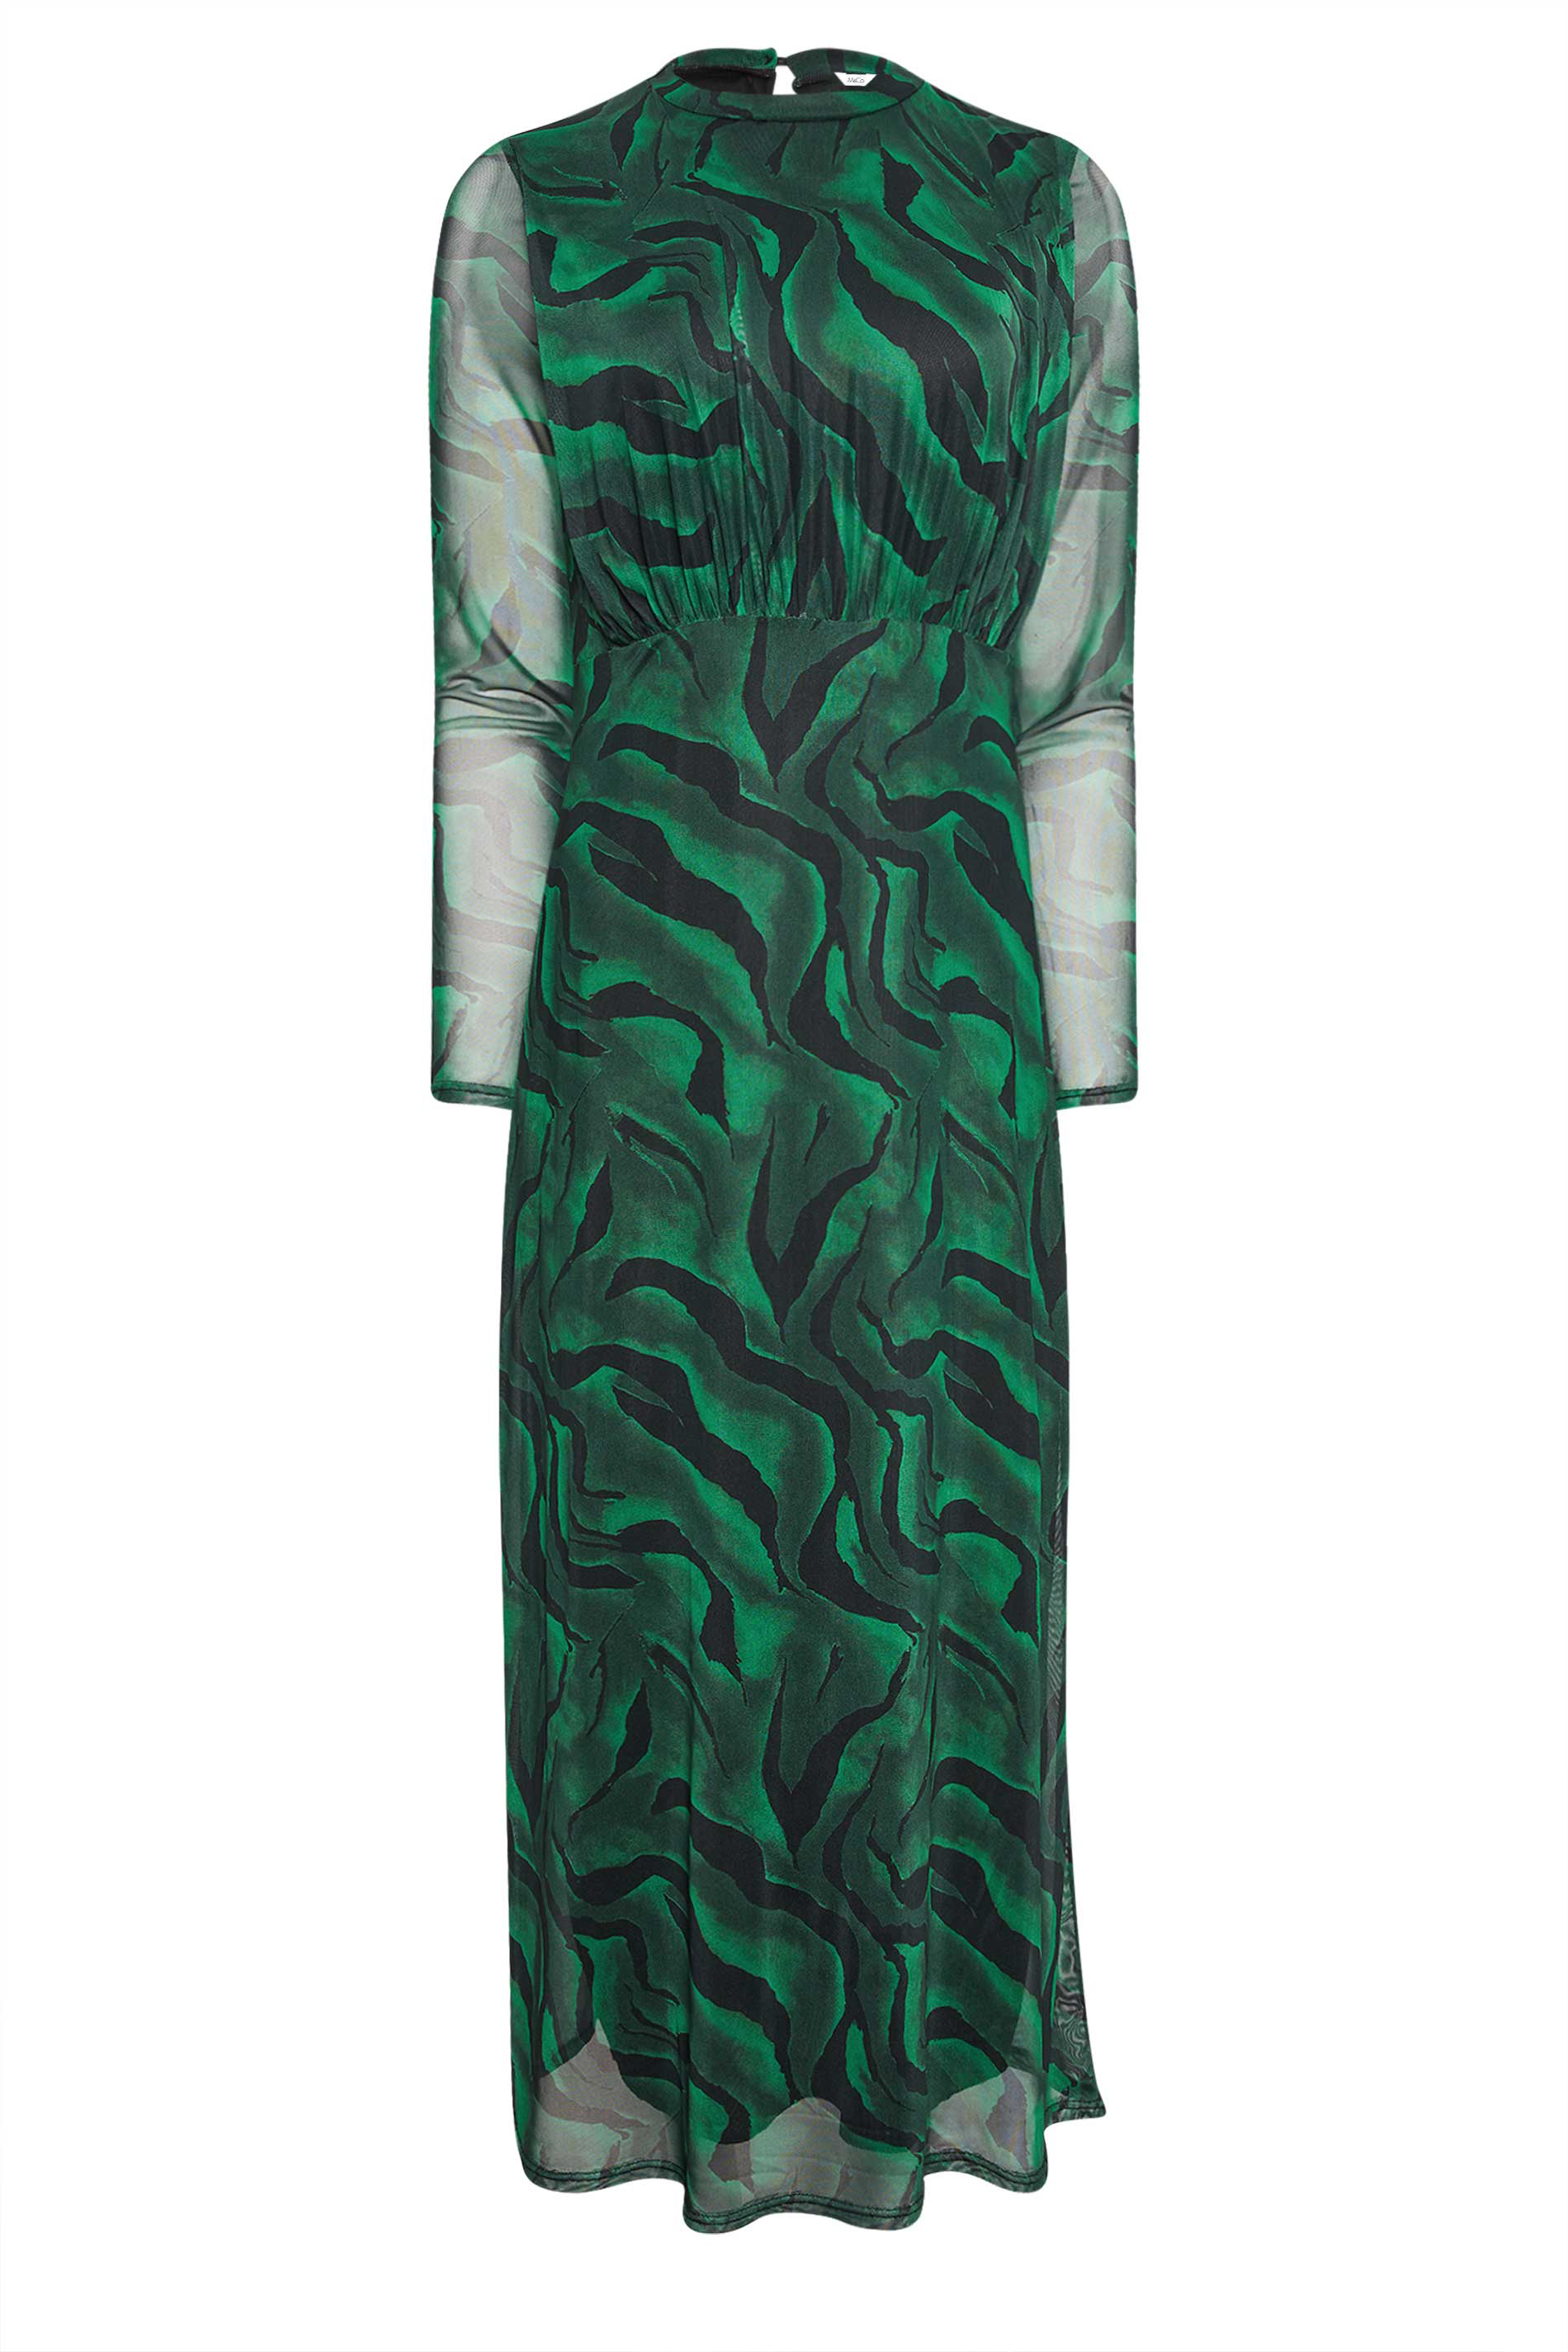 M&Co Green Abstract Print Mesh Maxi Dress | M&Co